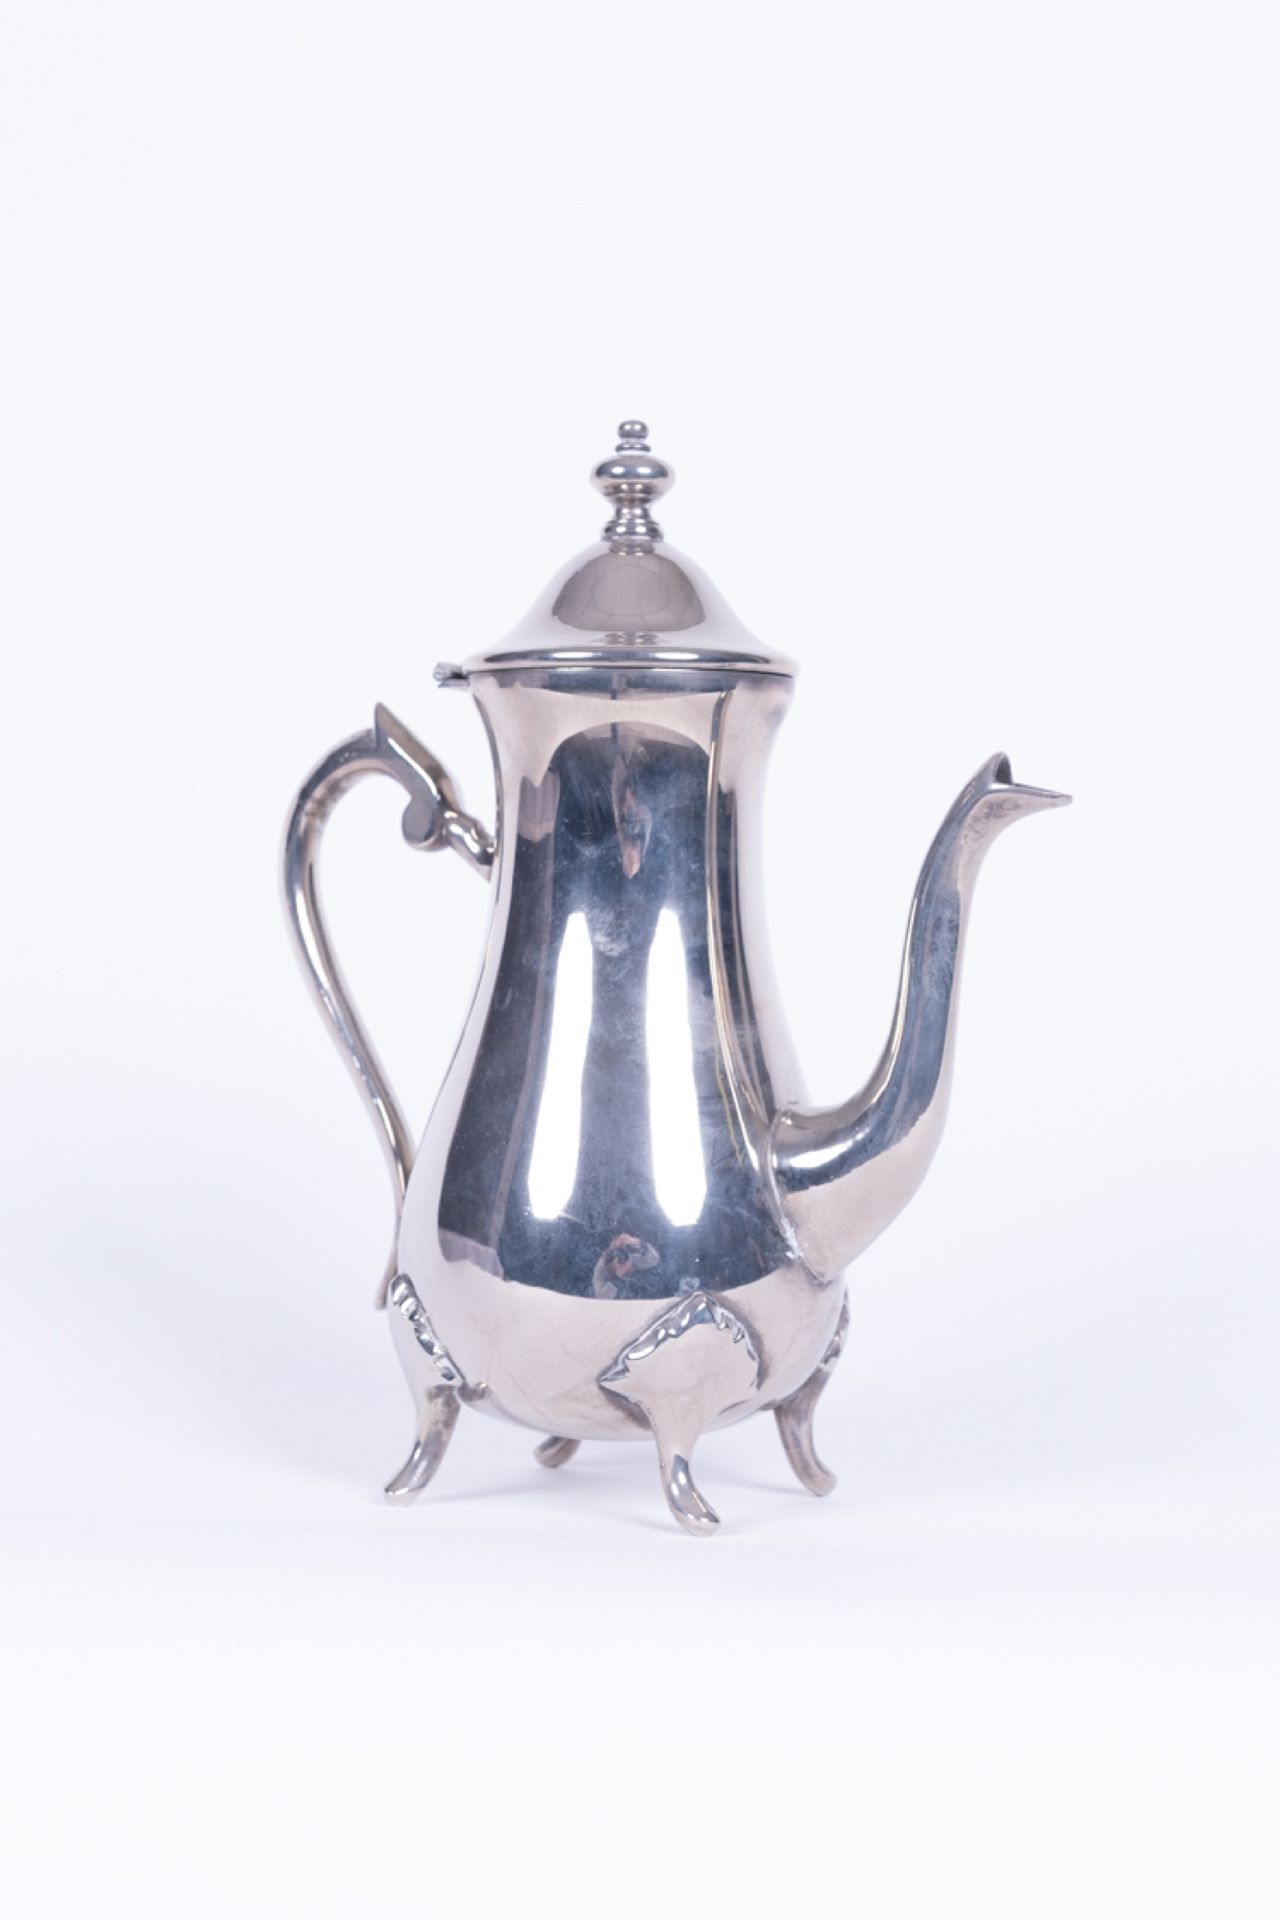 Null Bennani Frères, 摩洛哥

一个镀银的金属锅，放在四个脚上。

高度：25厘米